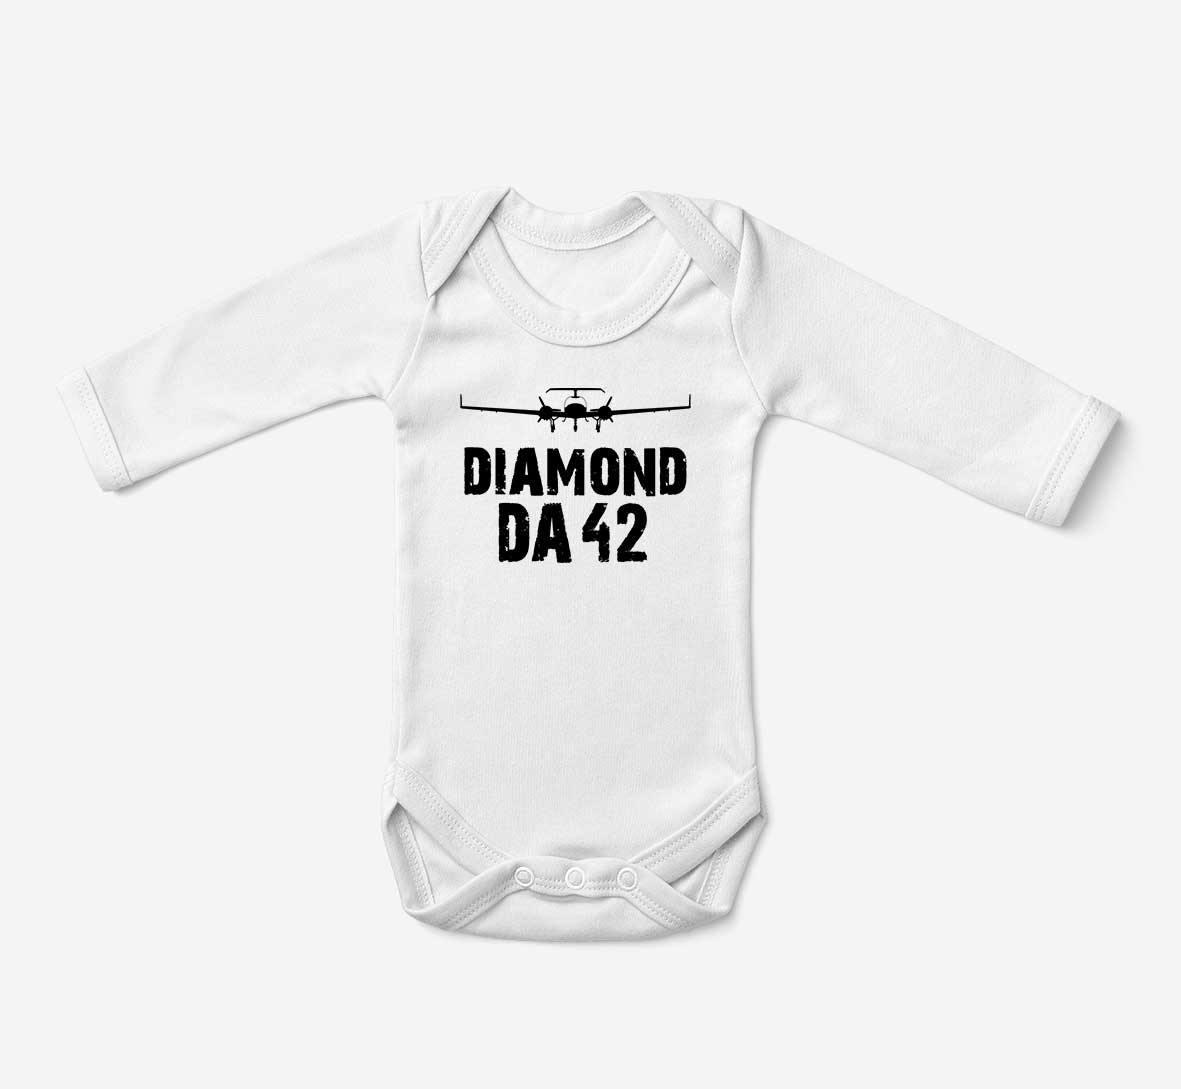 Diamond DA42 & Plane Designed Baby Bodysuits